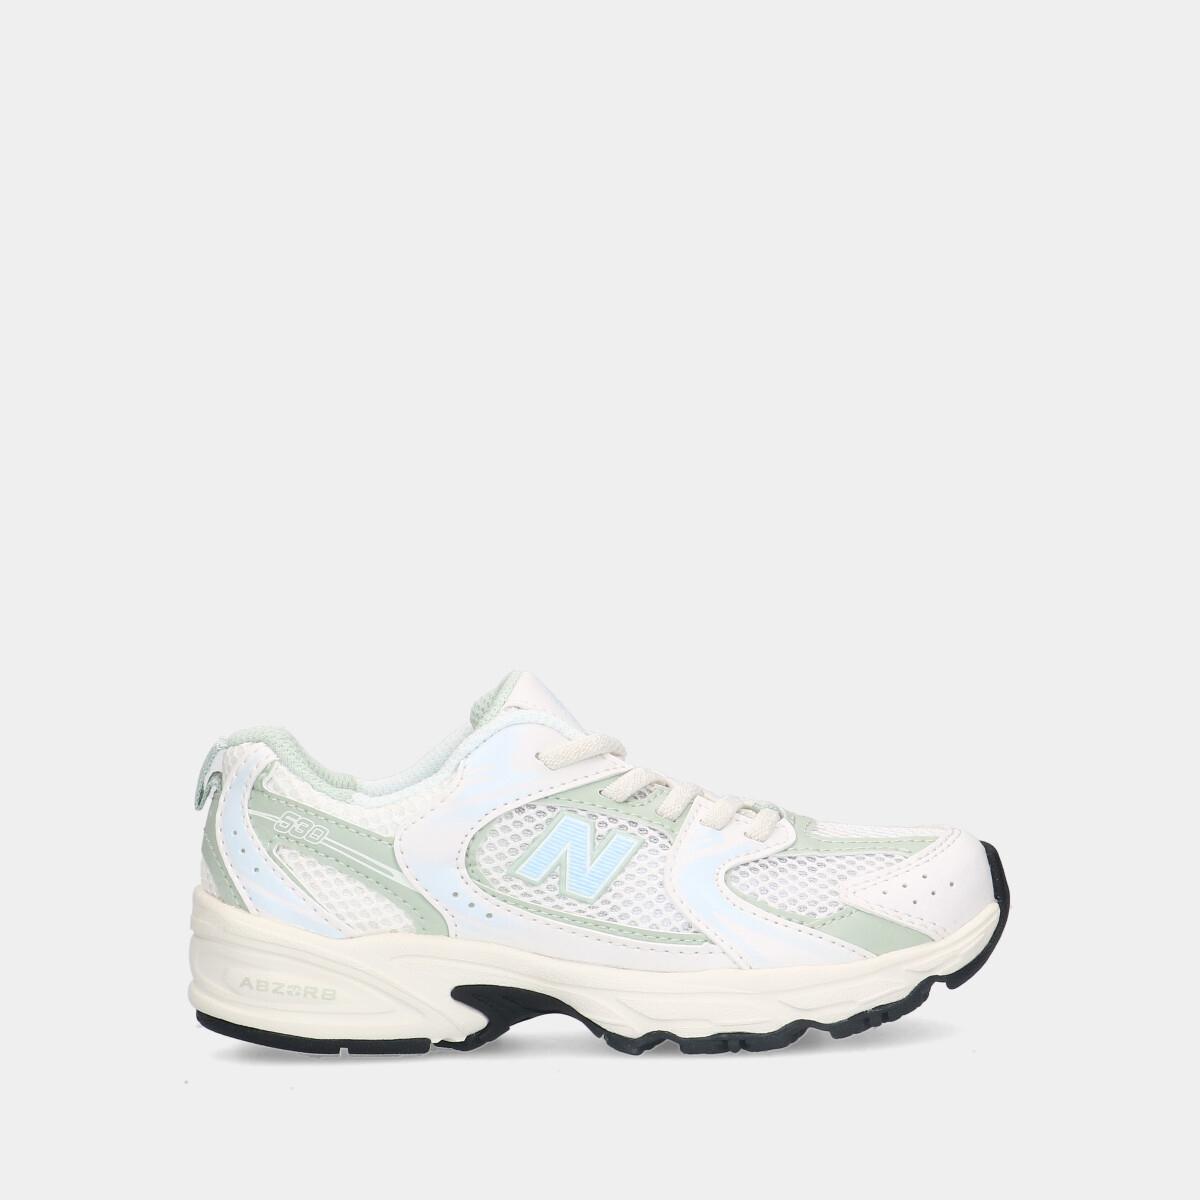 New Balance 530 Sea Salt White/Green kleuter sneakers